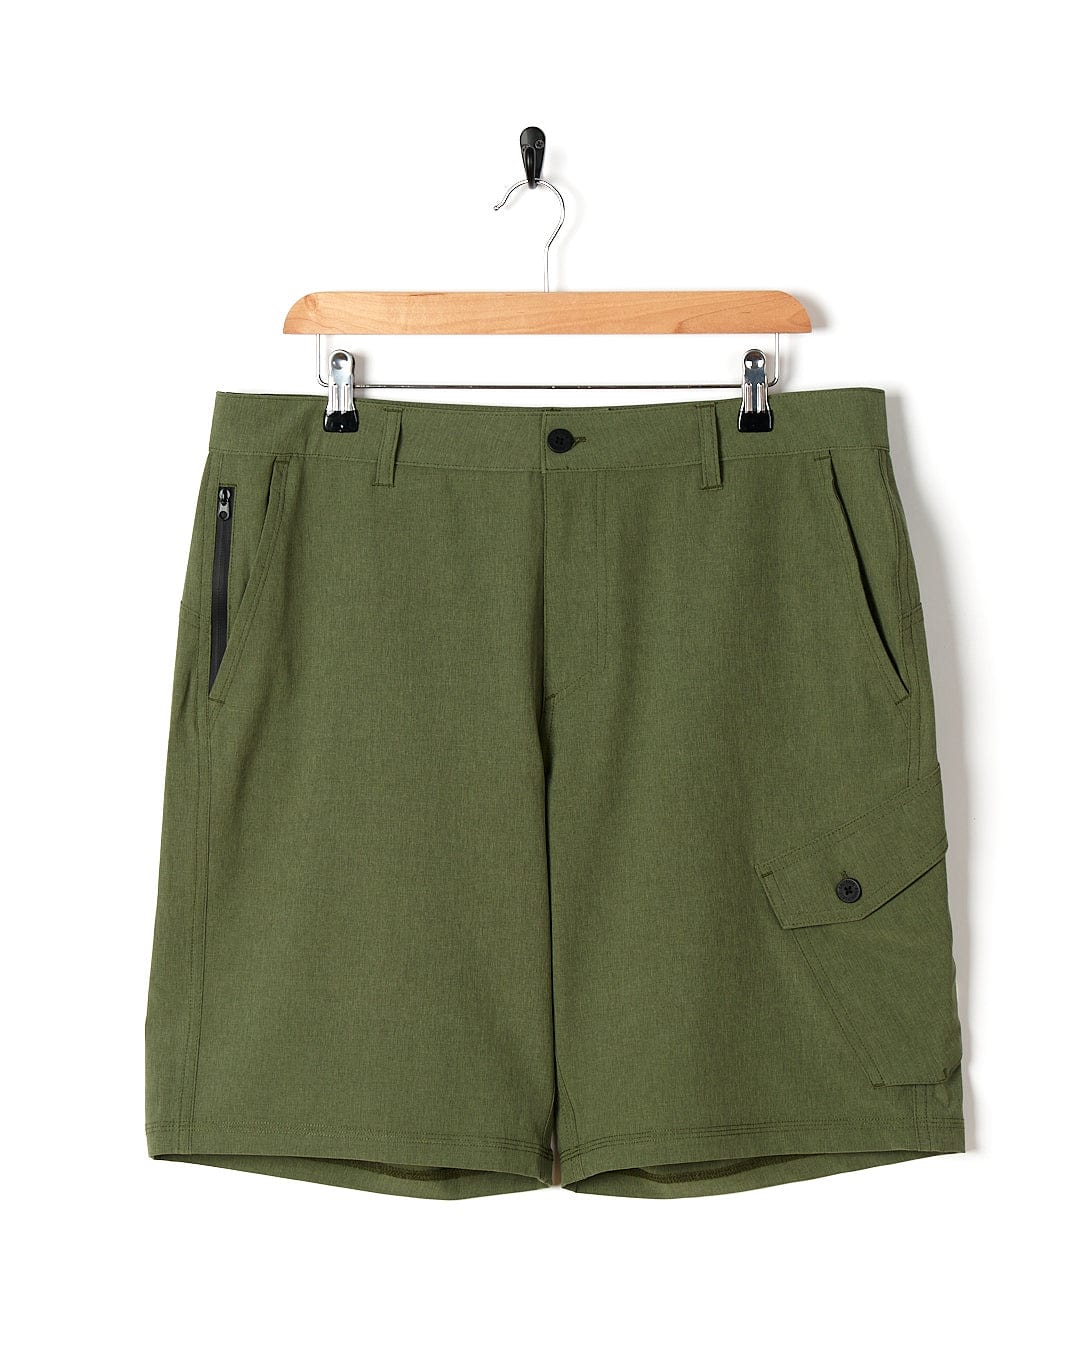 A pair of essential men's shorts, the Cargo Amphibian II - Mens Boardshort - Dark Green by Saltrock, hanging on a hanger.